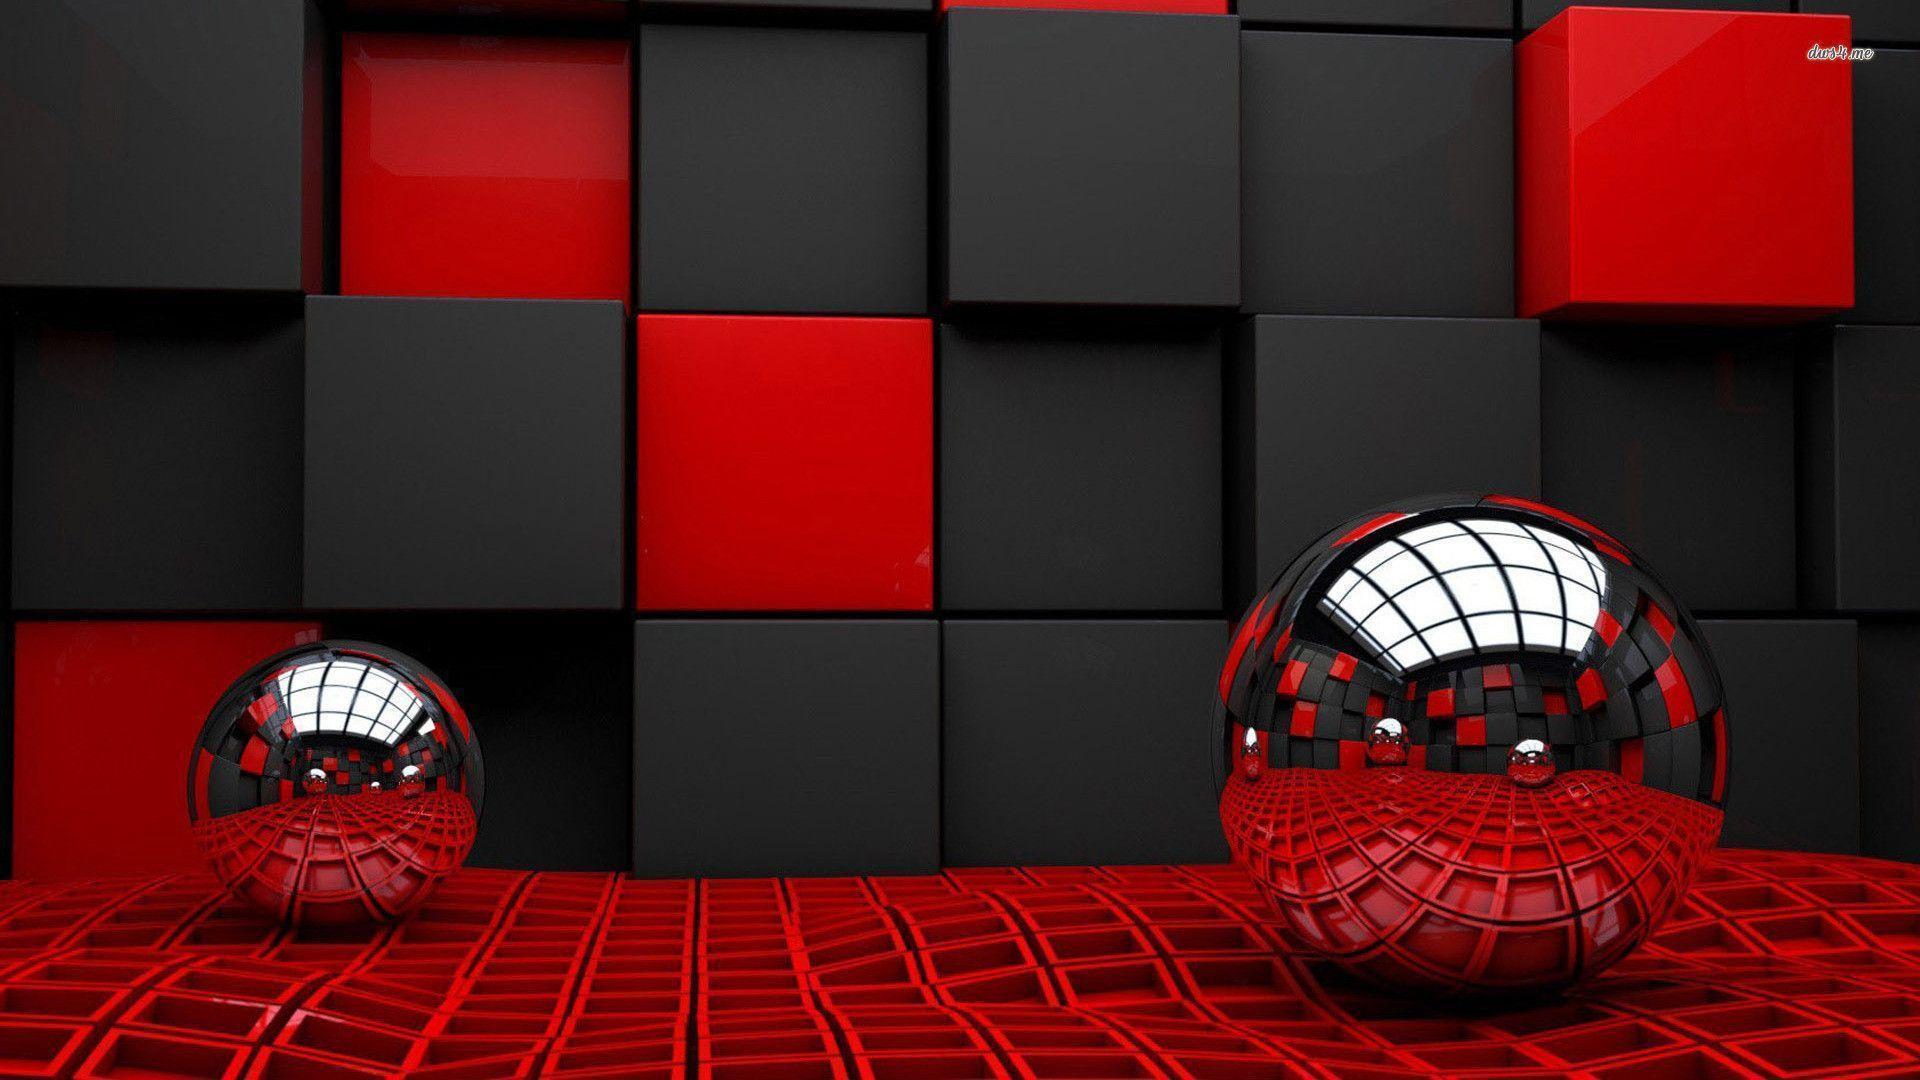 Metallic spheres reflecting the cube room wallpaper